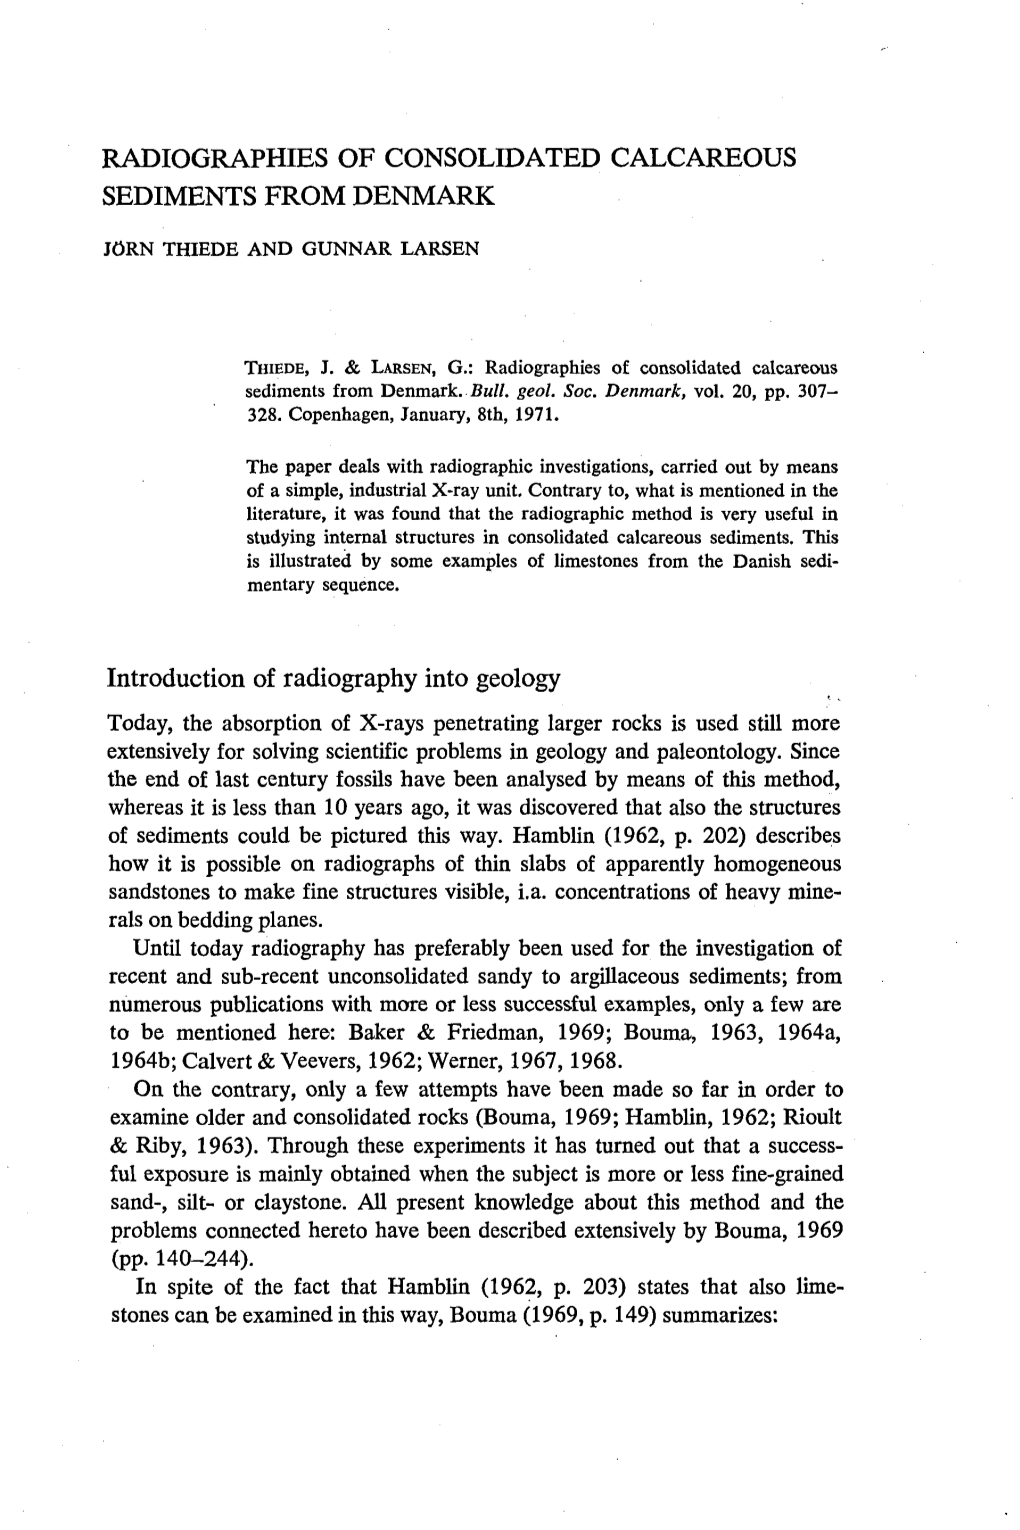 Bulletin of the Geological Society of Denmark, Vol. 20/3 Pp. 307-328